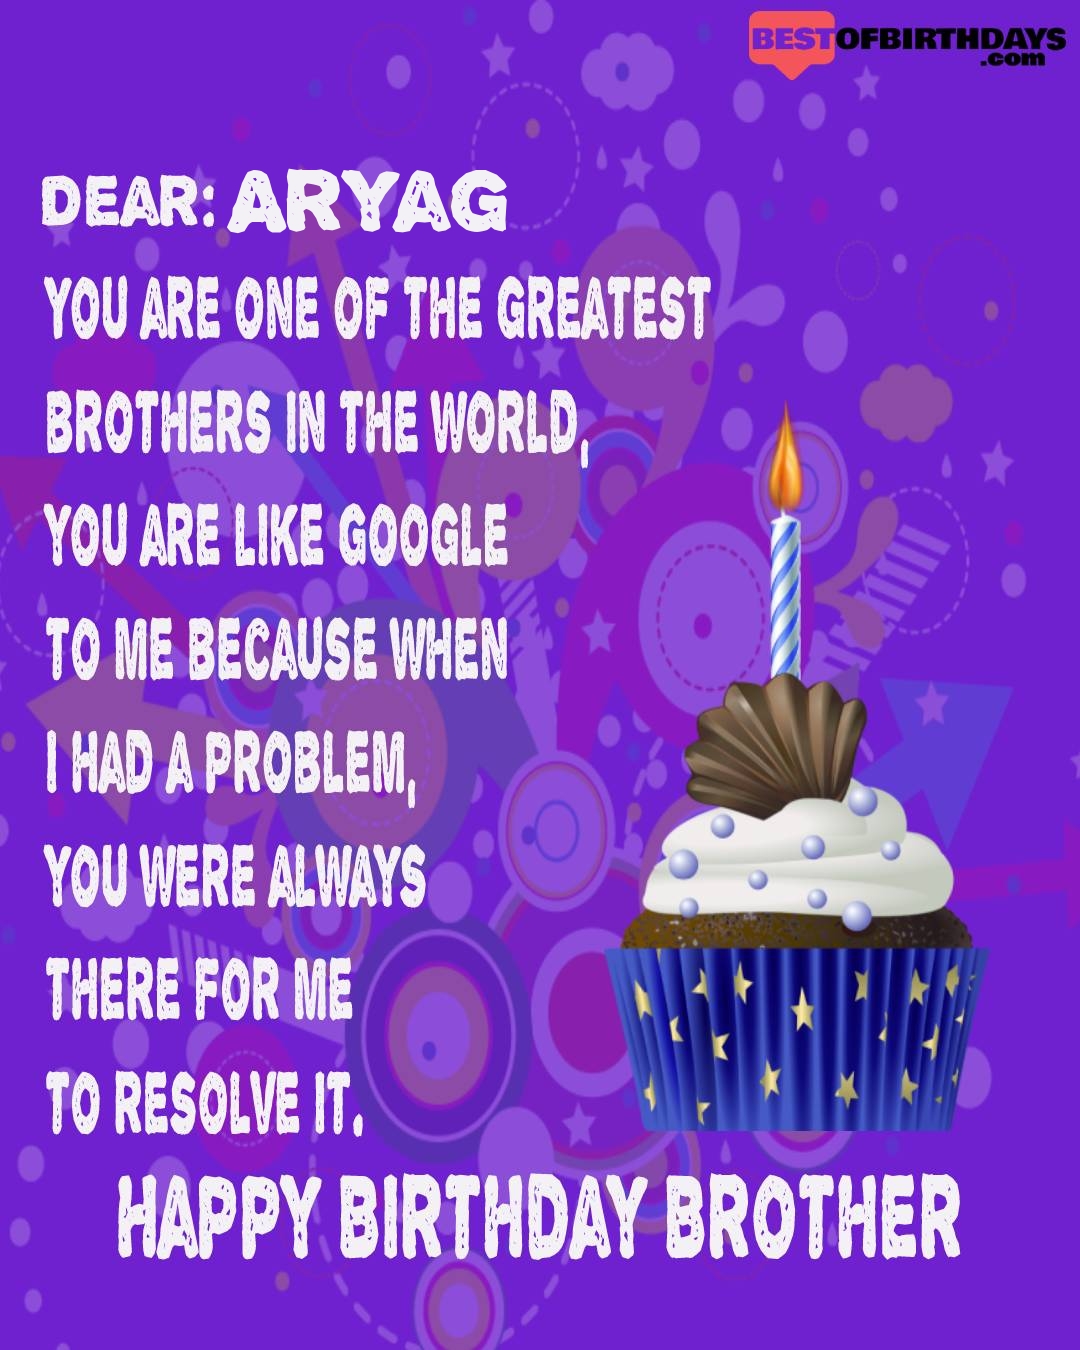 Happy birthday aryag bhai brother bro